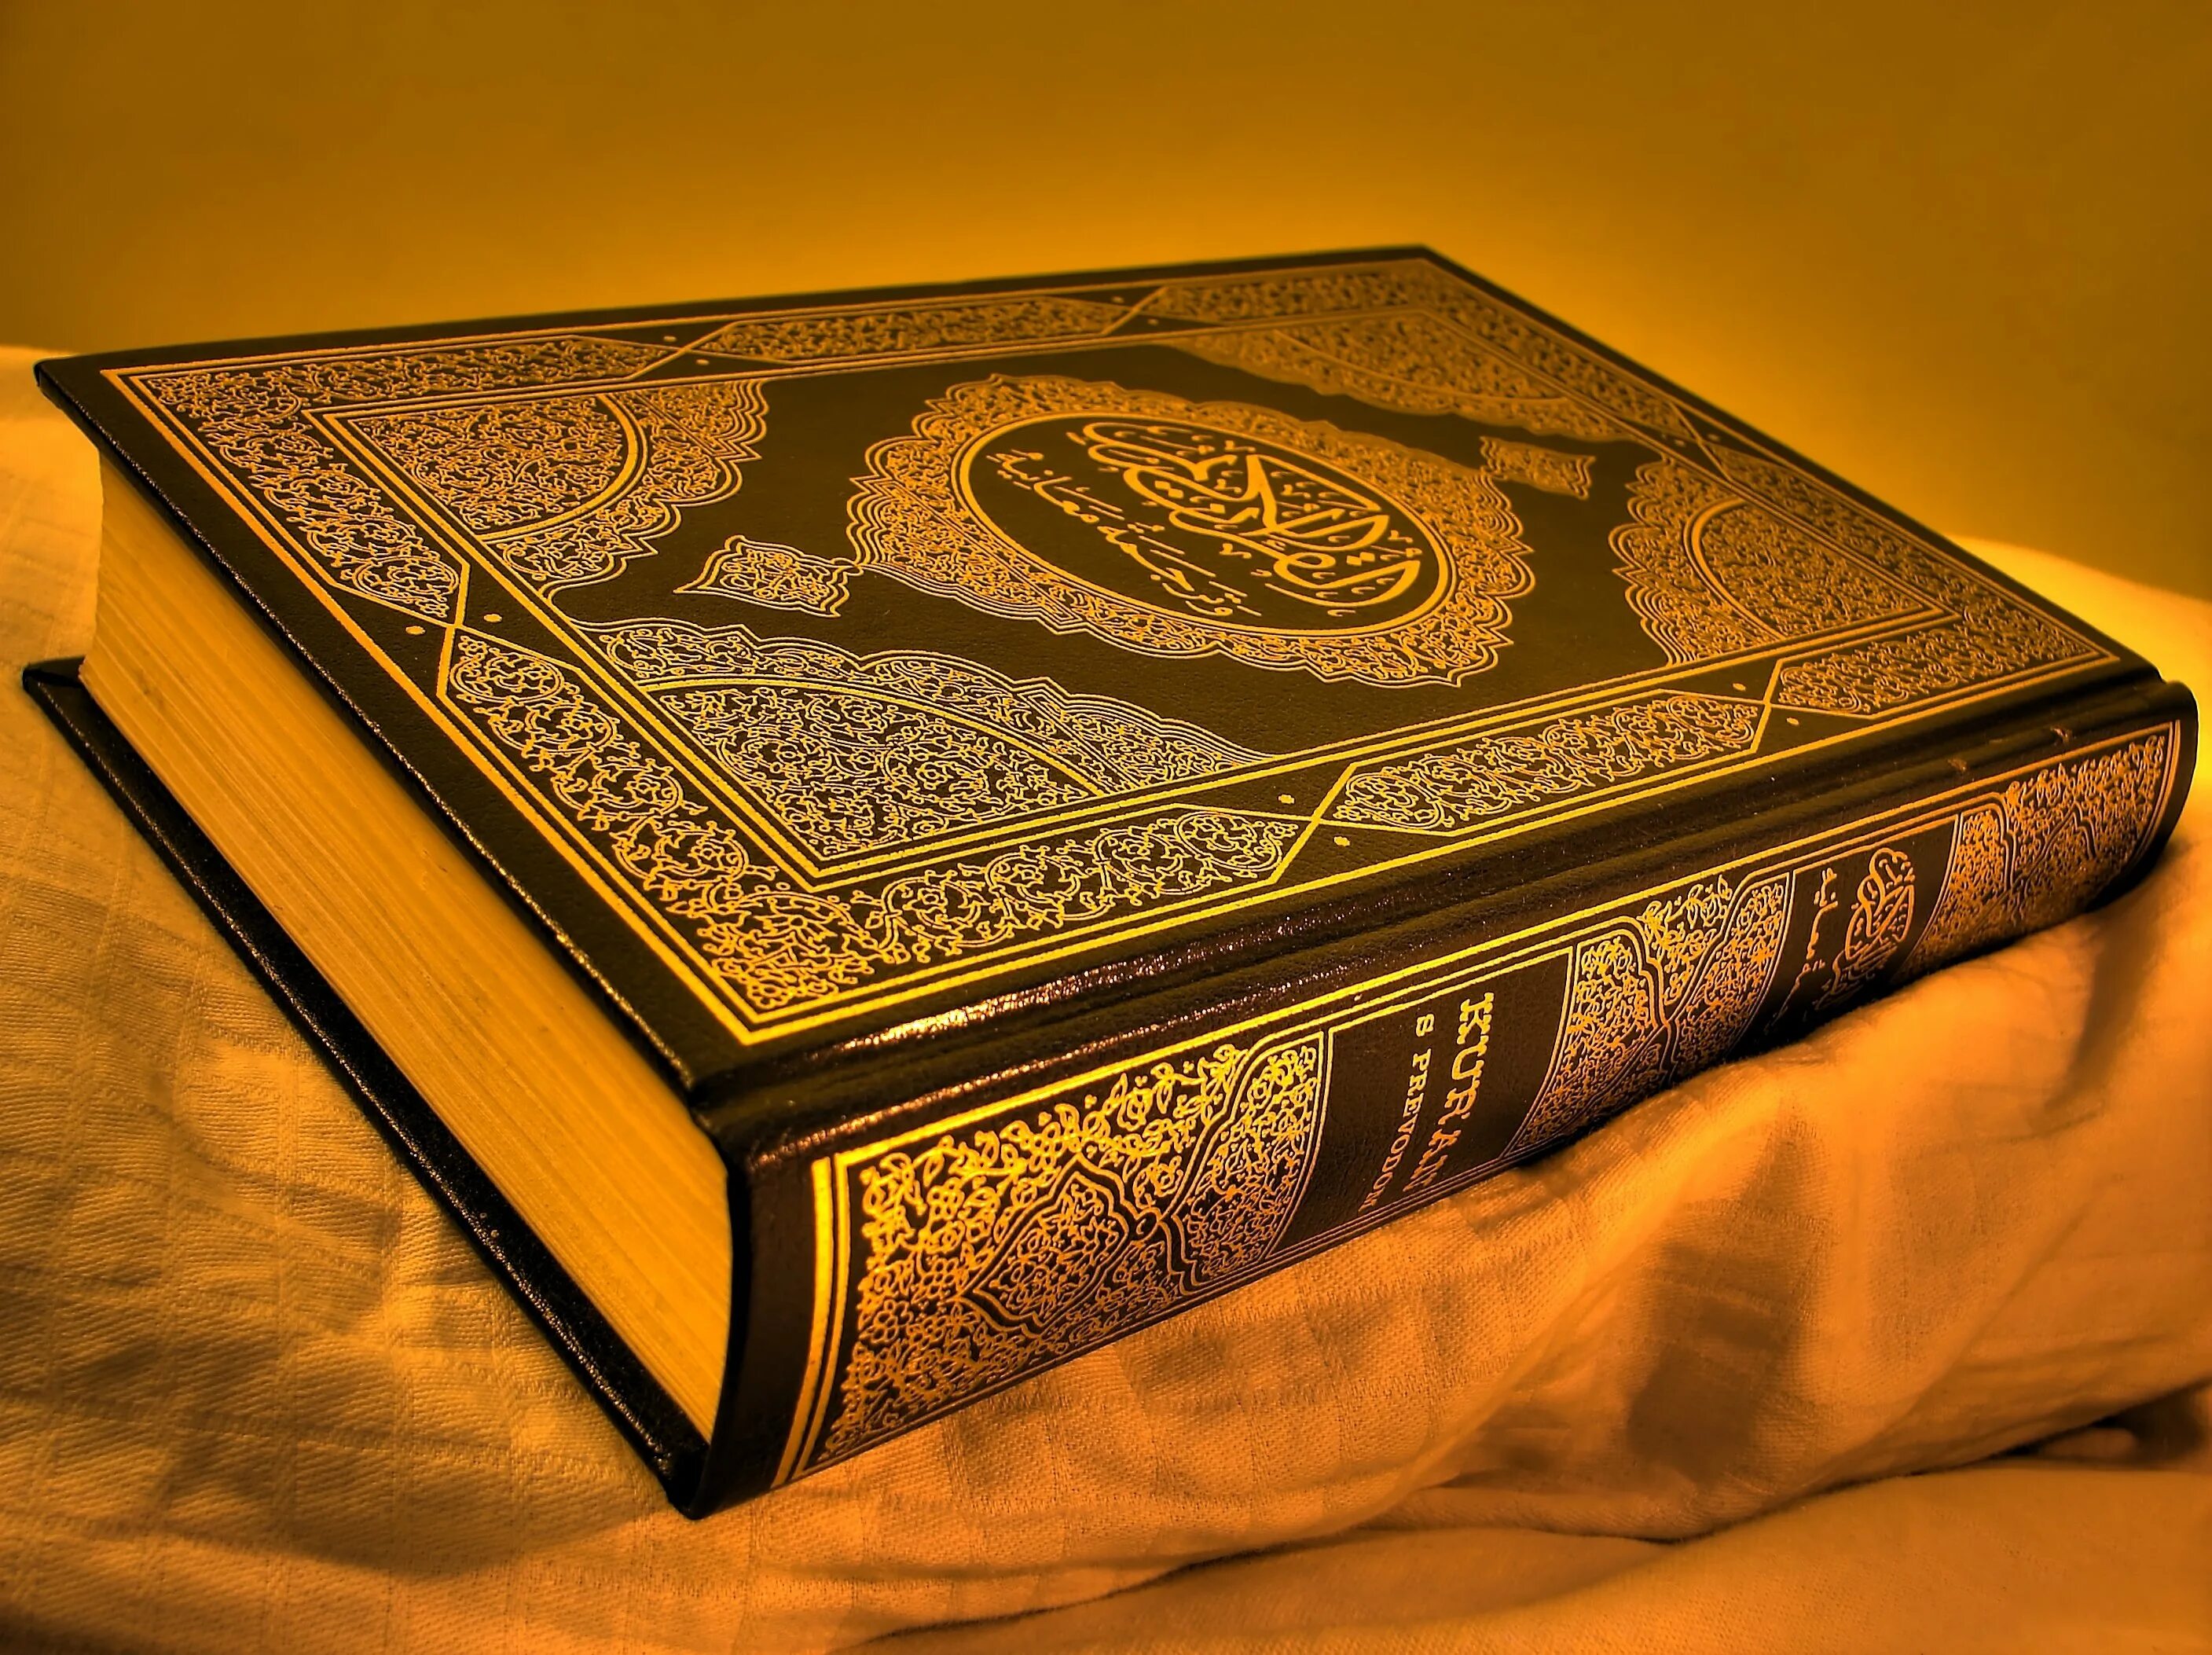 Құран кәрім. Основной низам правления Саудовской Аравии. Коран. Коран и сунна. Коран фон.